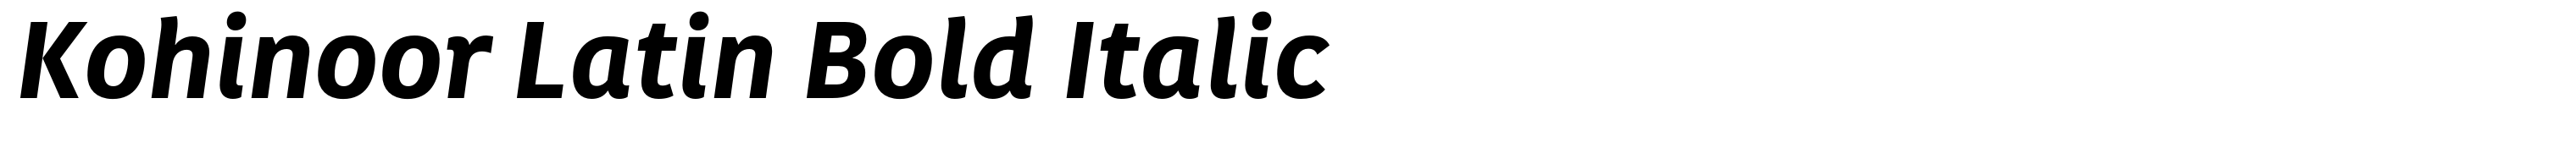 Kohinoor Latin Bold Italic